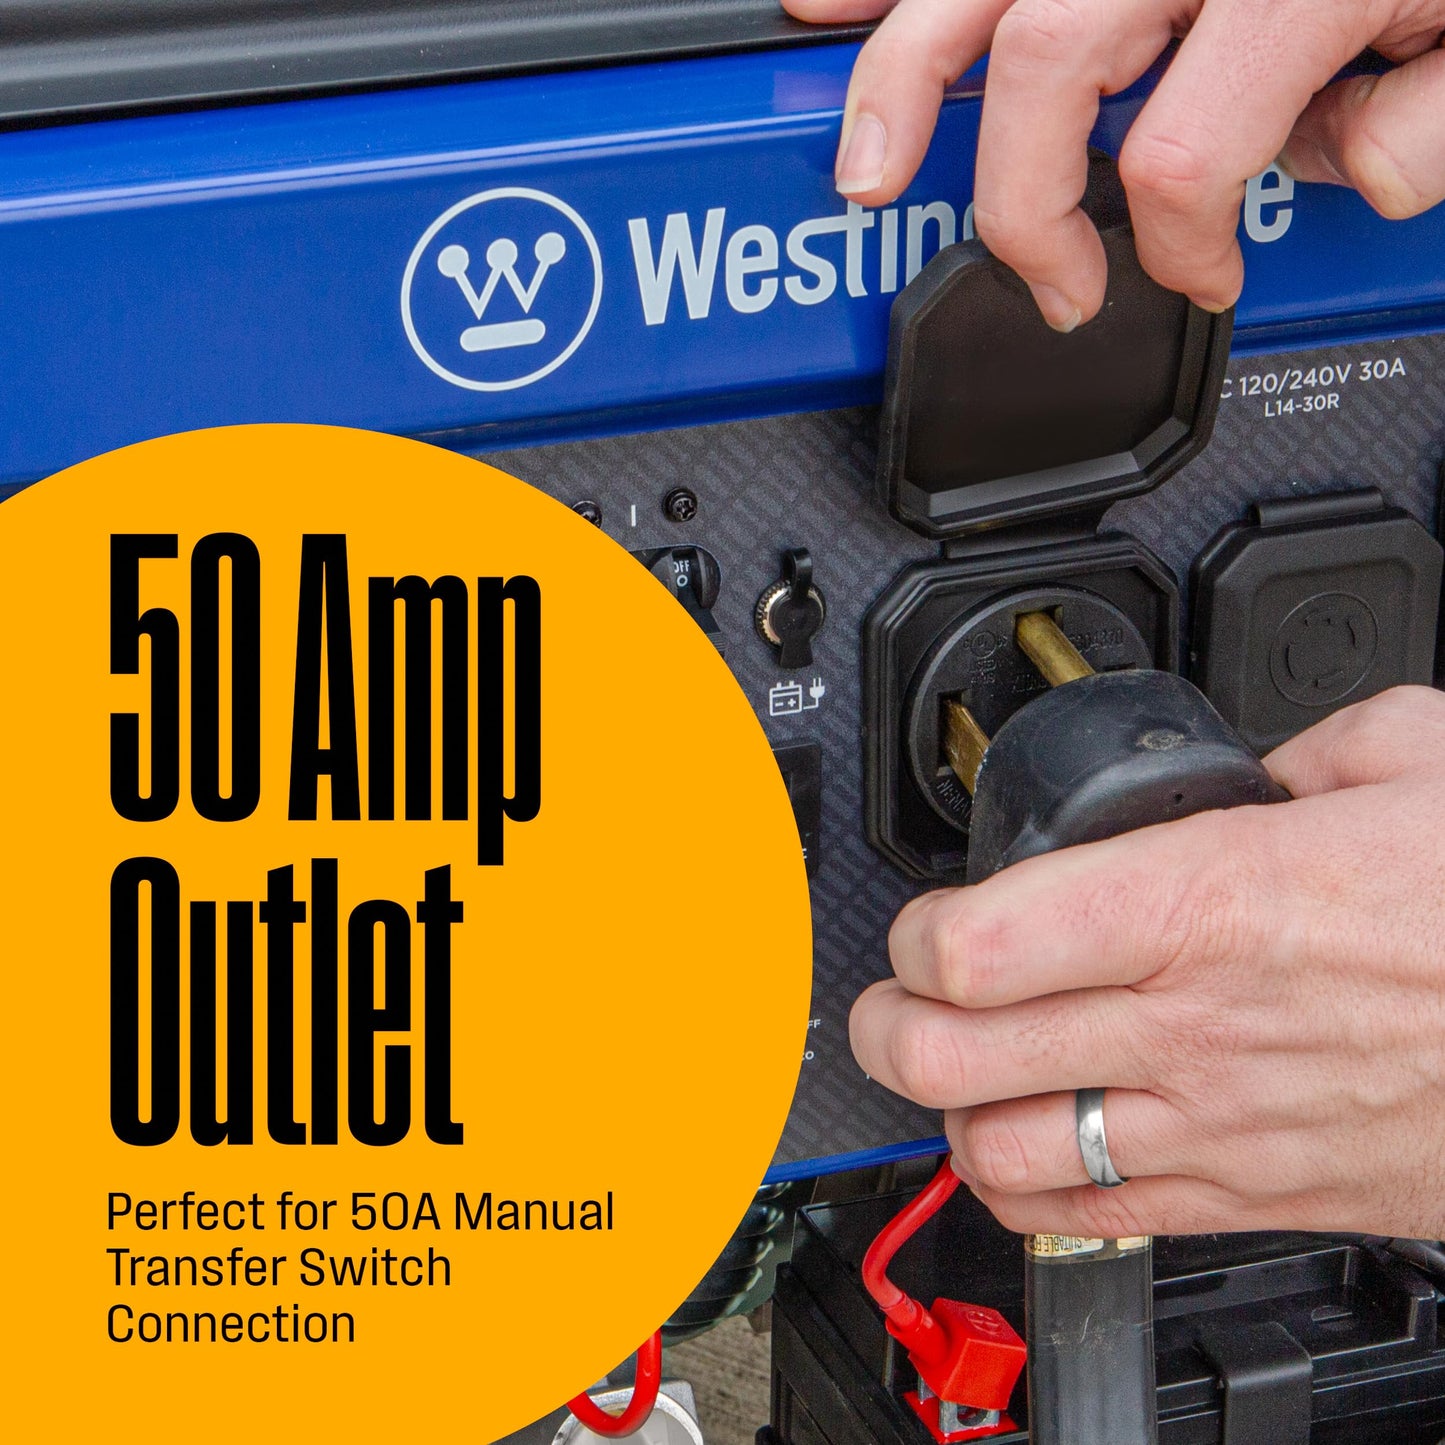 Westinghouse 12500W Dual Fuel Backup Generator, Remote Start, Transfer Switch Ready